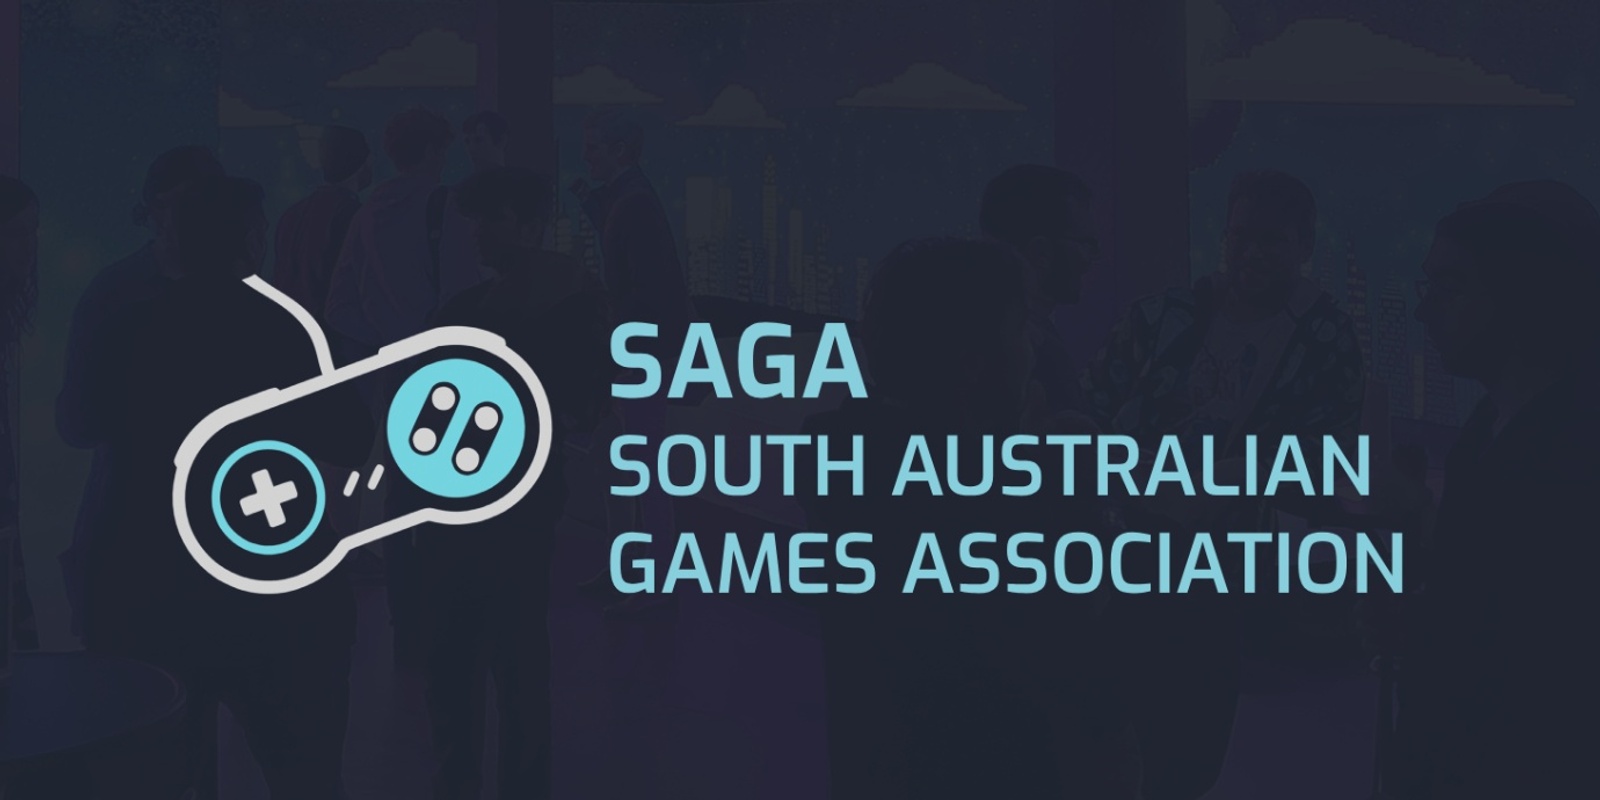 South Australian Games Association's banner